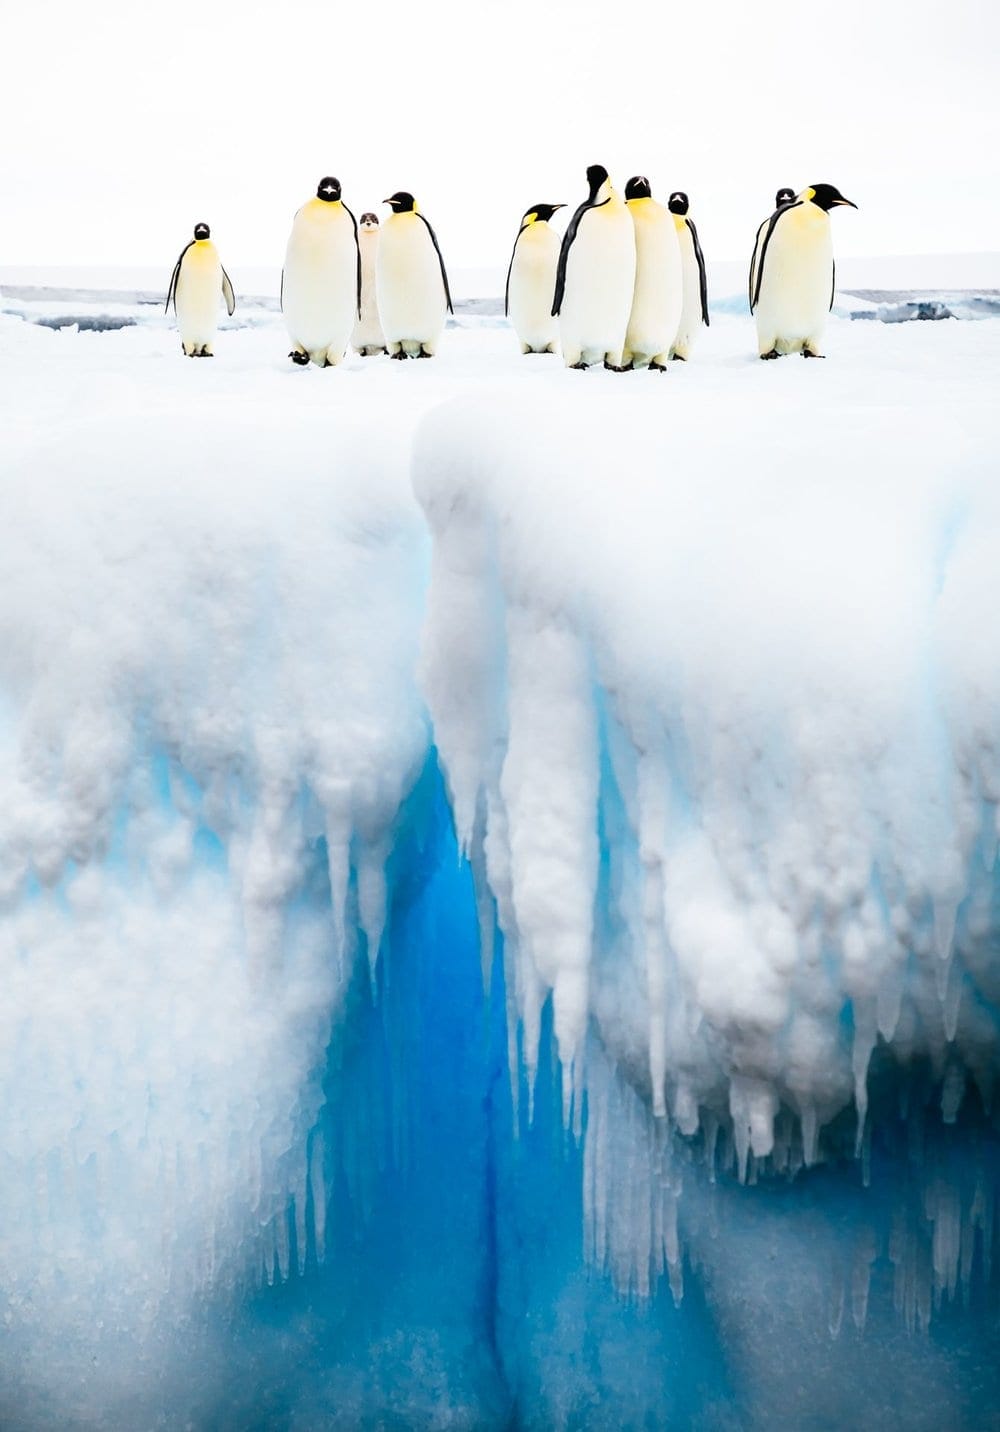   PHOTO CREDIT:  Andrew Peacock LOCATION: Ross Sea (Antarctica) 